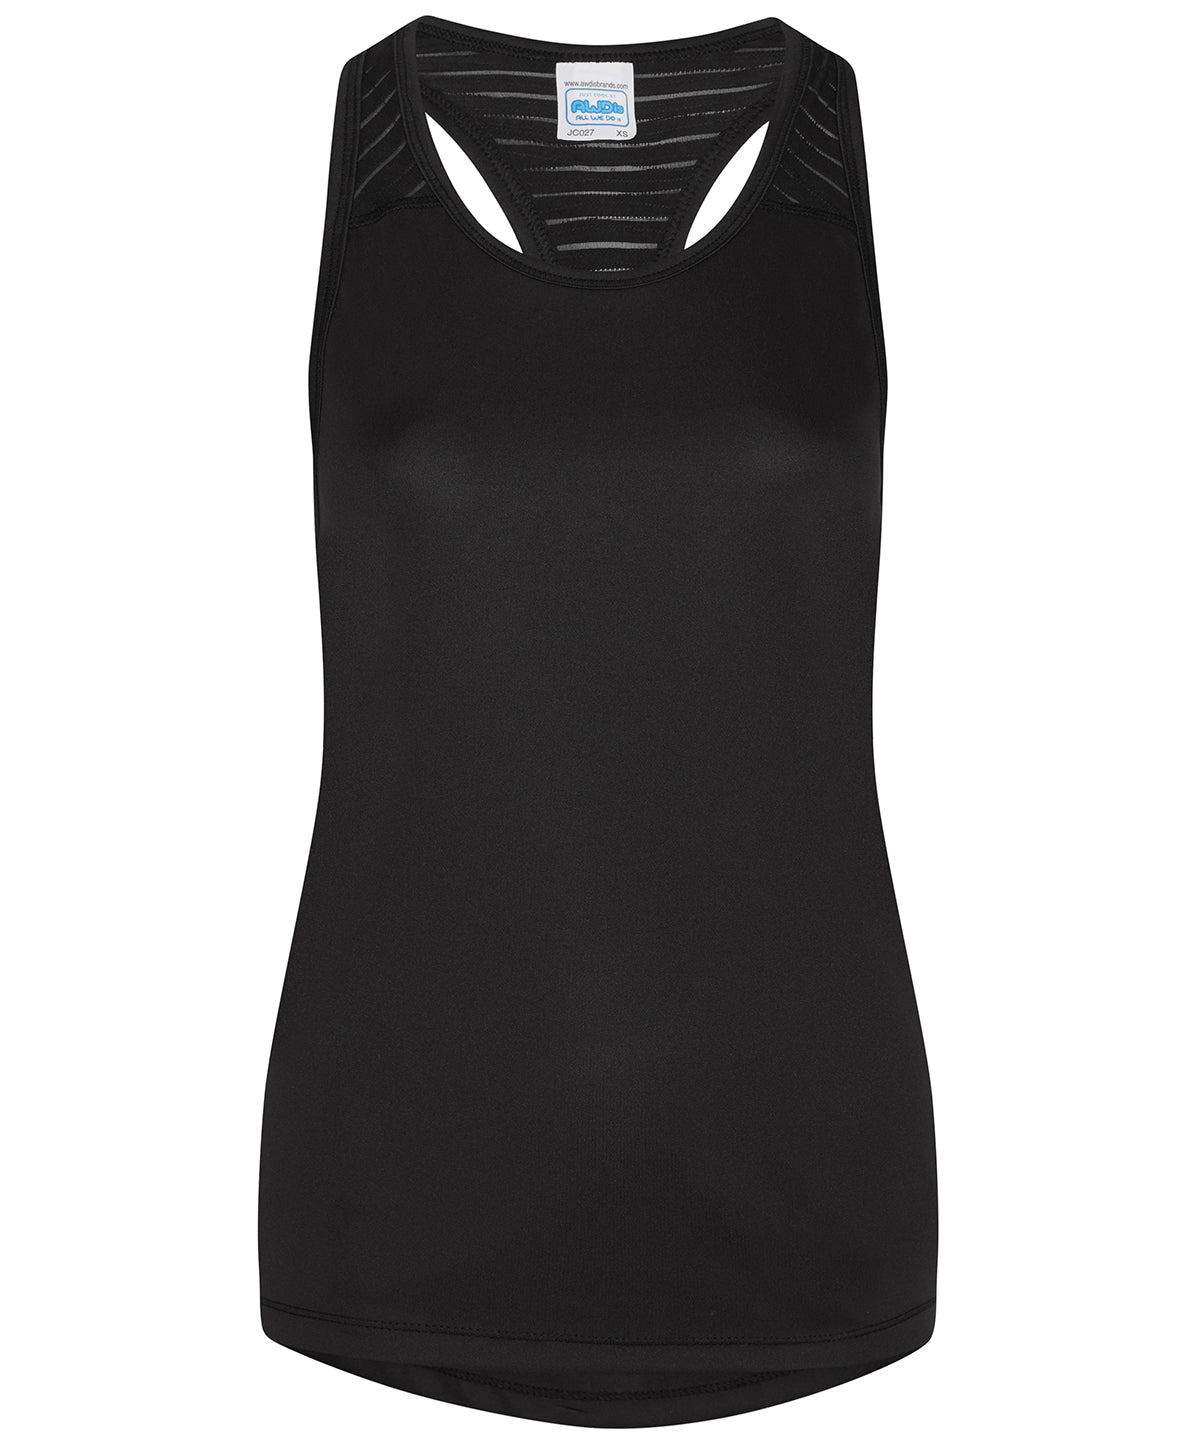 Vesti - Women's Cool Smooth Workout Vest